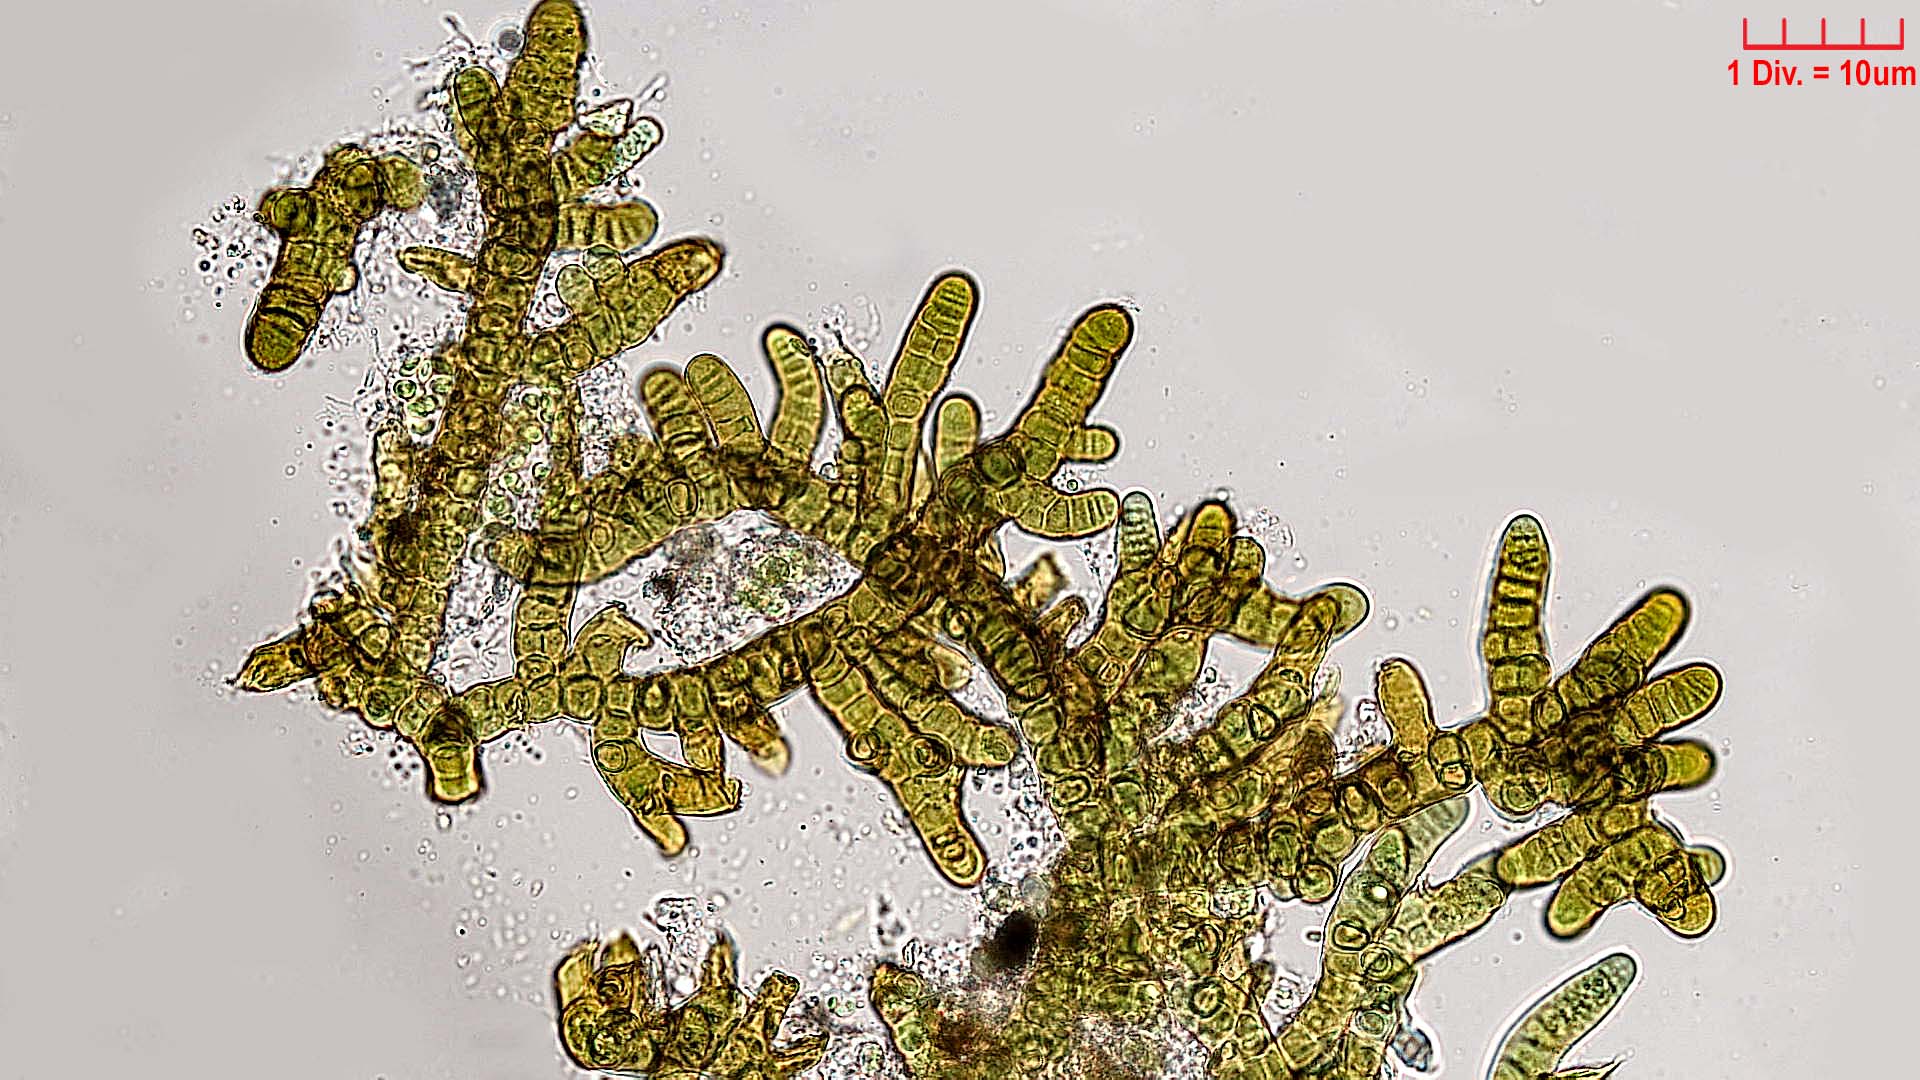 ./Cyanobacteria/Nostocales/Stigonemataceae/Stigonema/minutum/stigonema-minutum-533.jpg